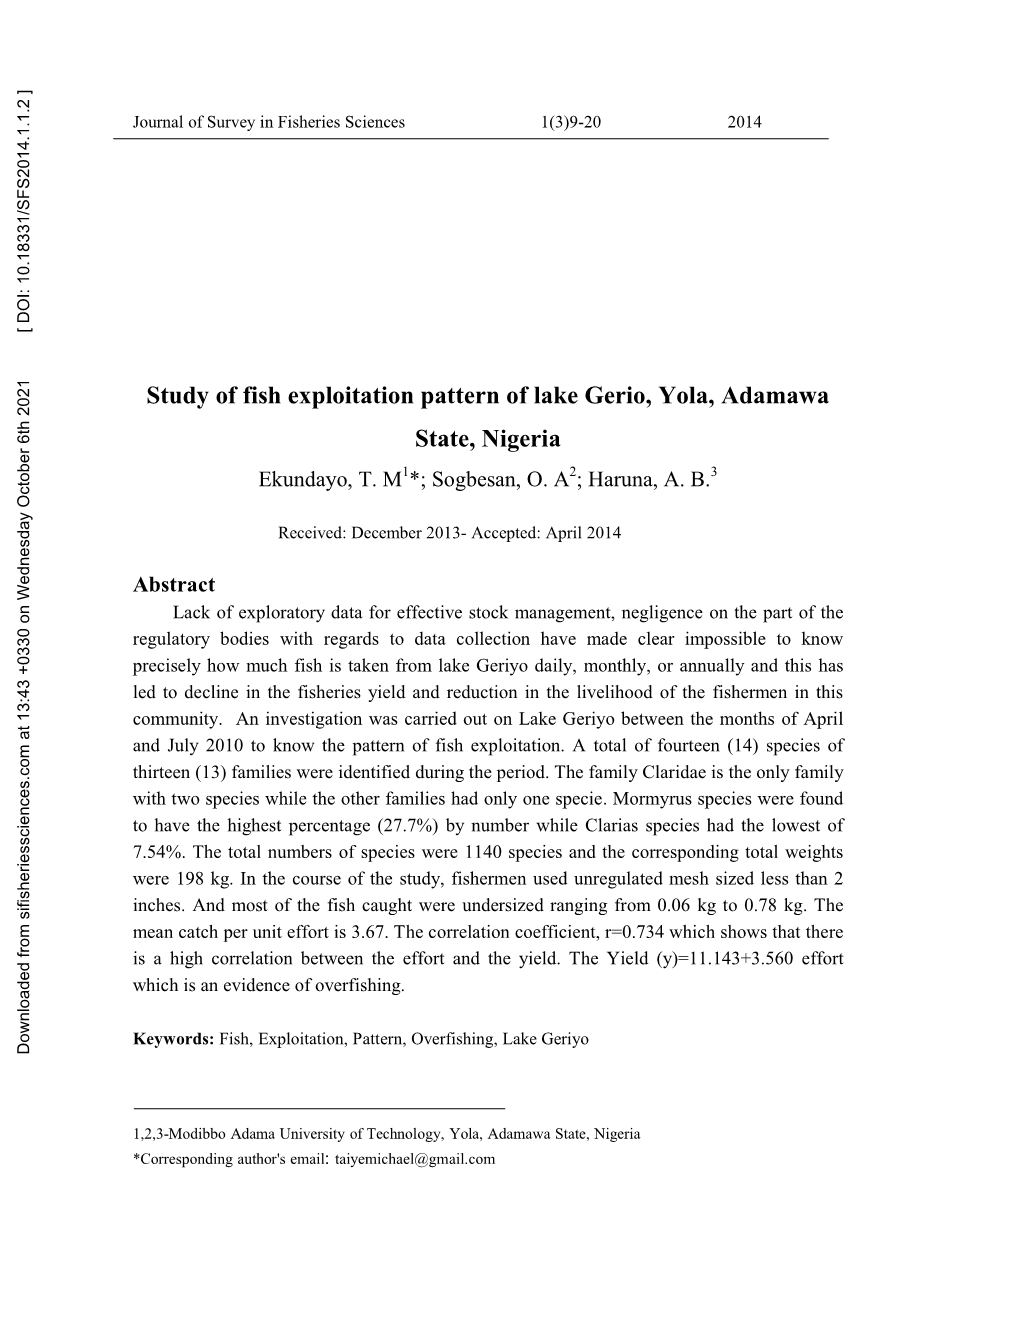 Study of Fish Exploitation Pattern of Lake Gerio, Yola, Adamawa State, Nigeria Ekundayo, T